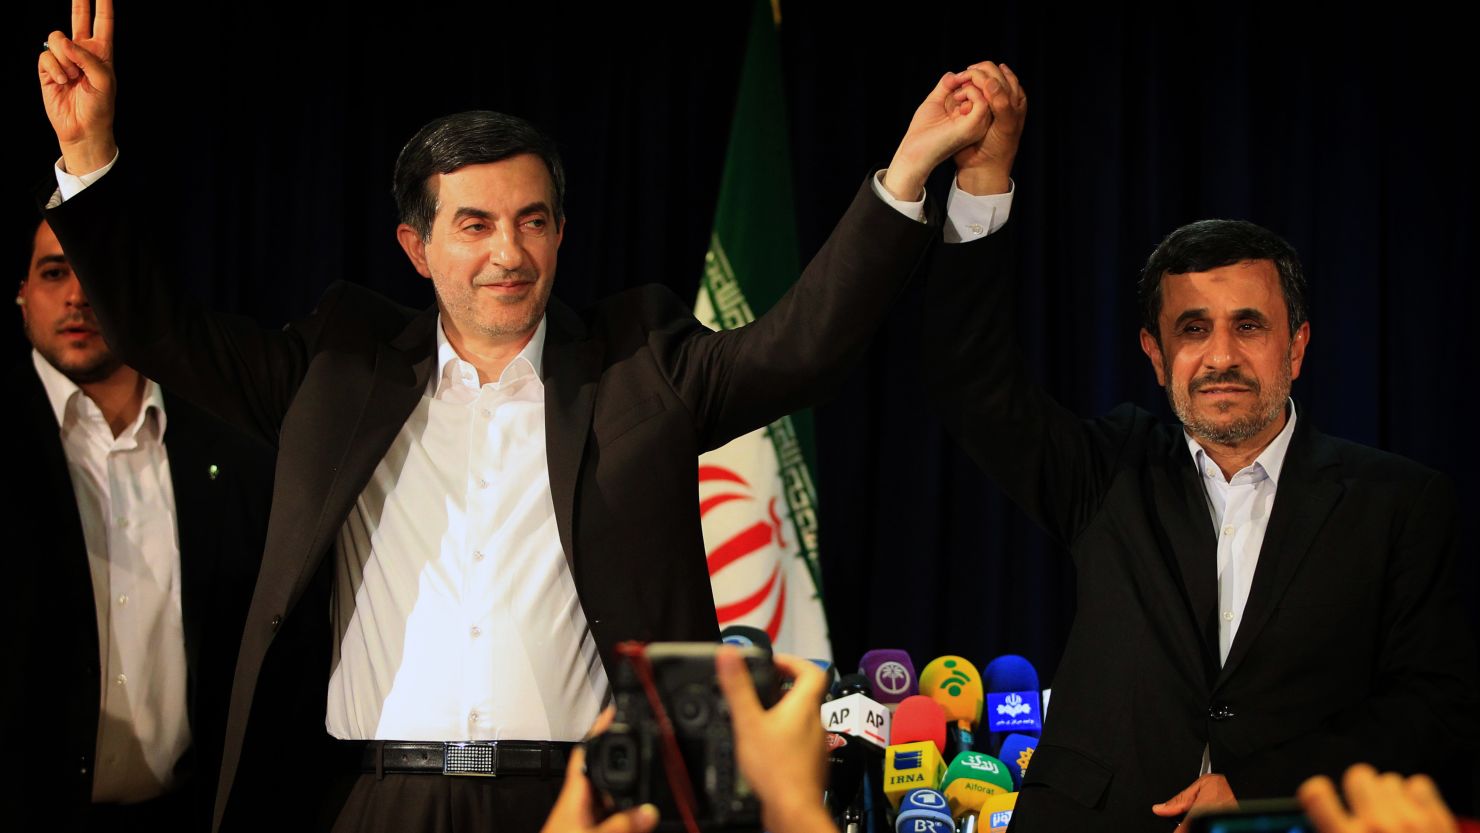 President Mahmoud Ahmadinejad, right, and Esfandiar Rahim Mashaei wave during a conference in Tehran on May 11.